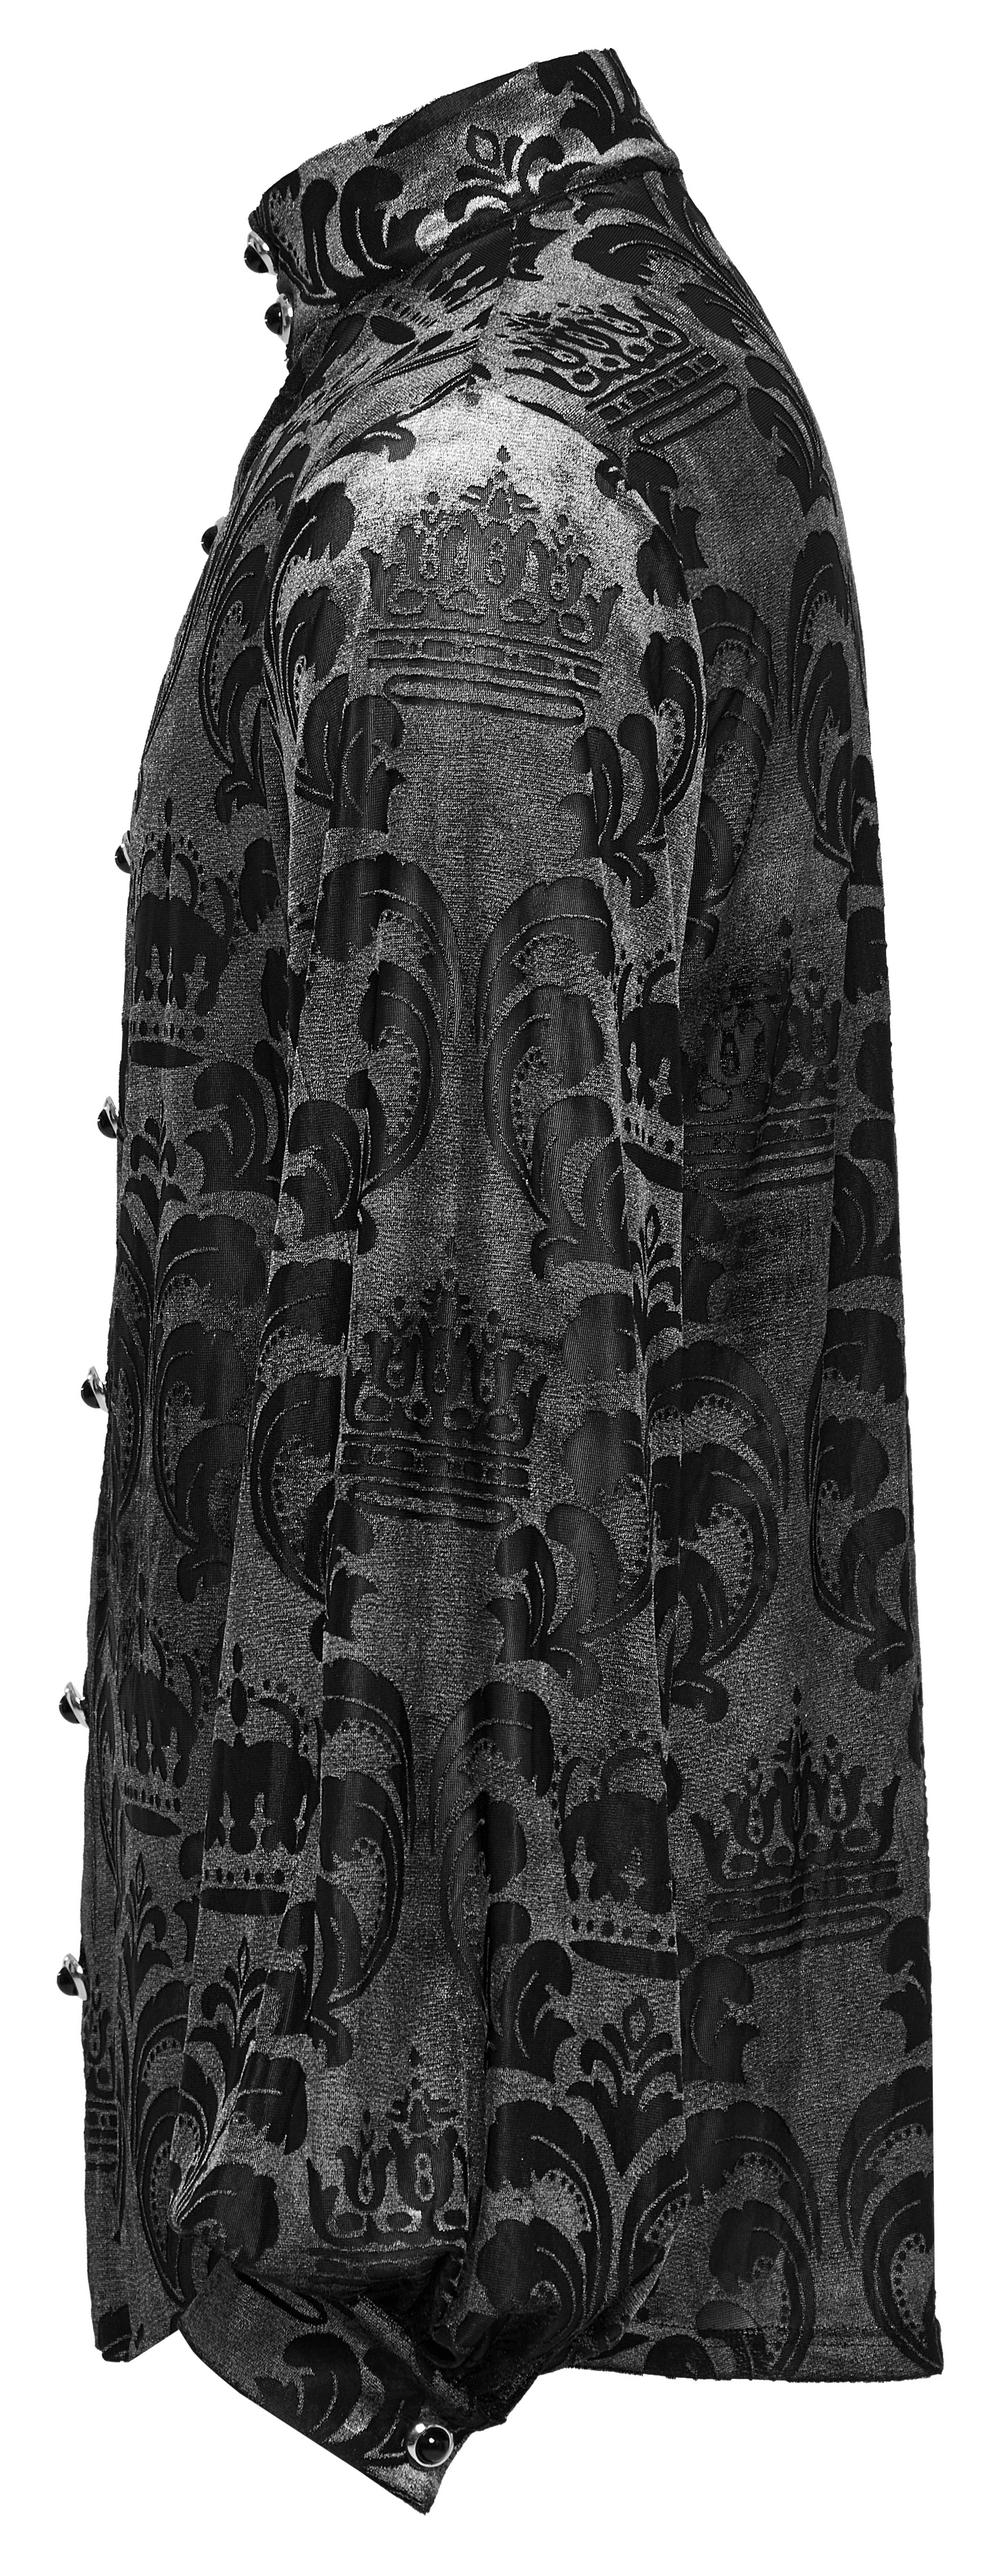 Gothic Shirt with Velvet Crown Pattern for Men